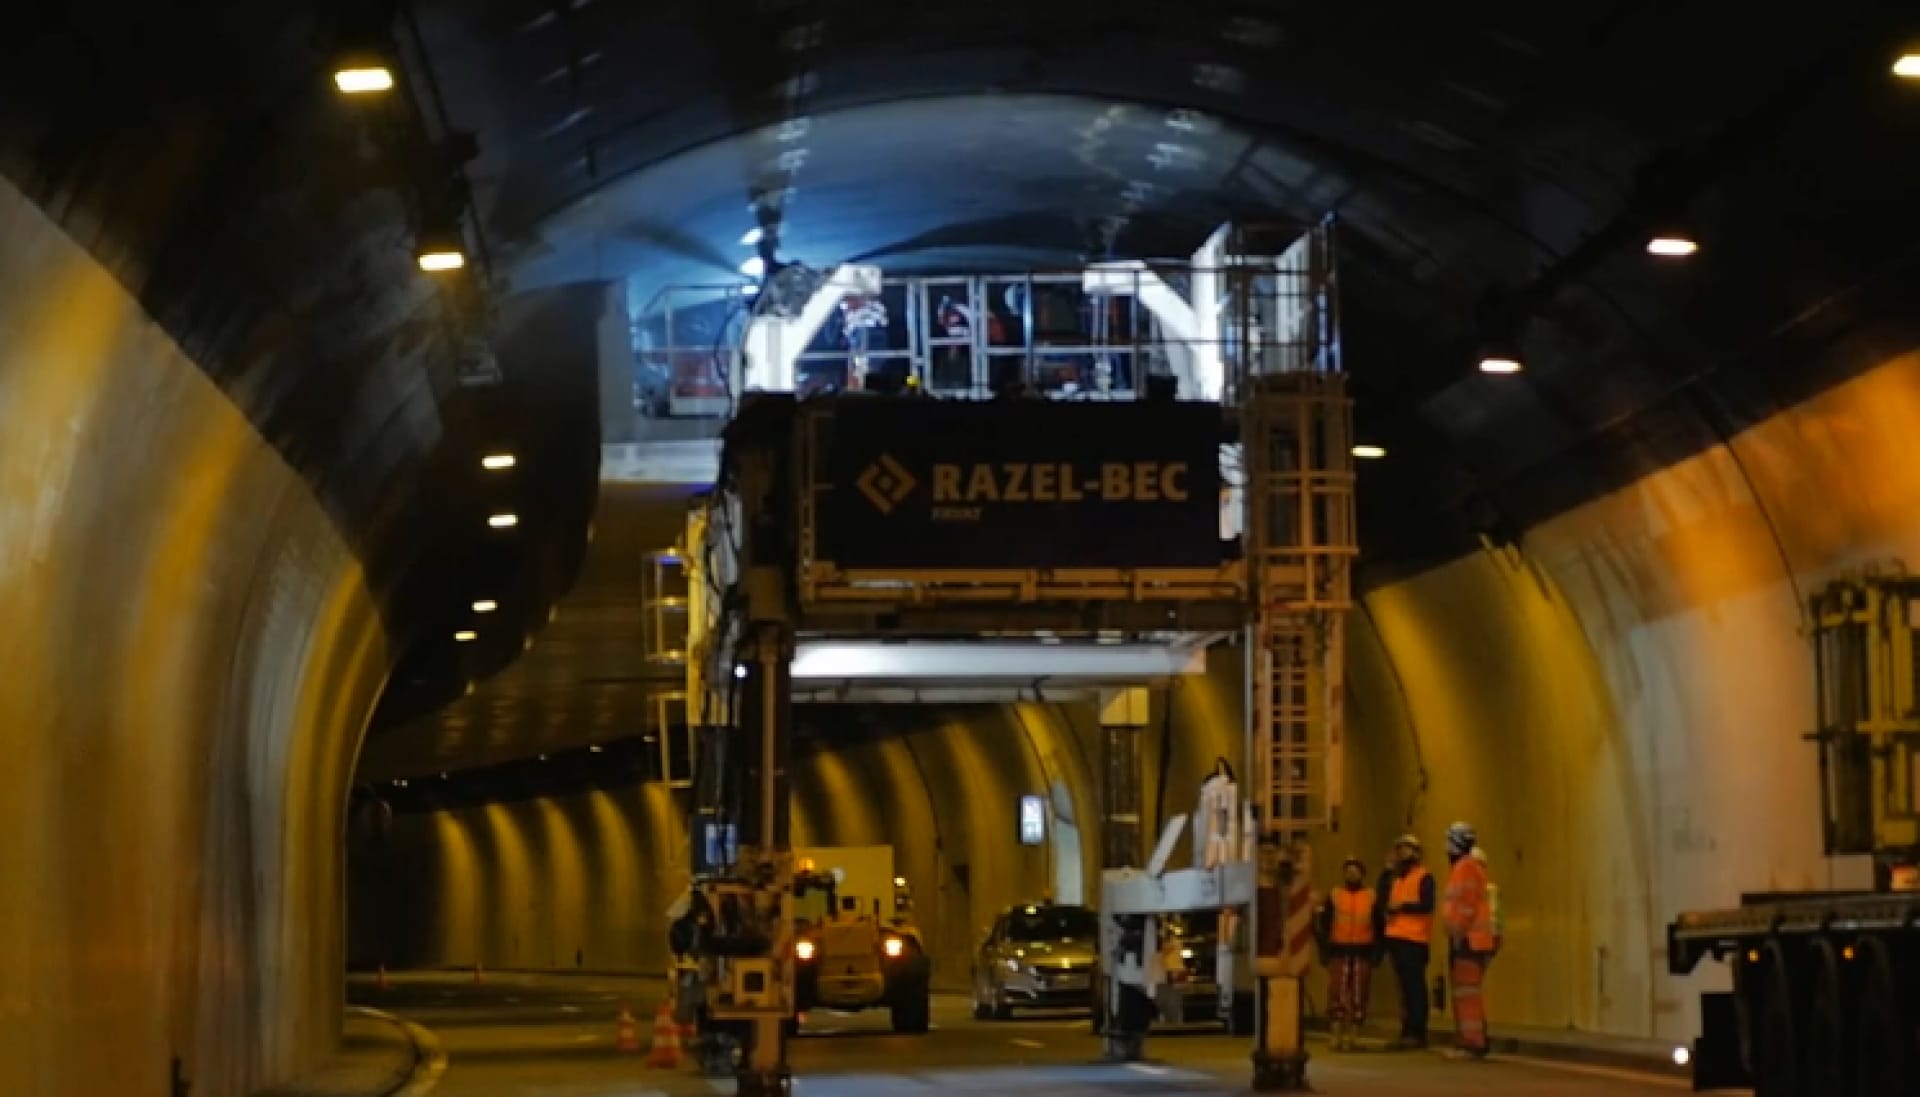 Tunnel à Lyon